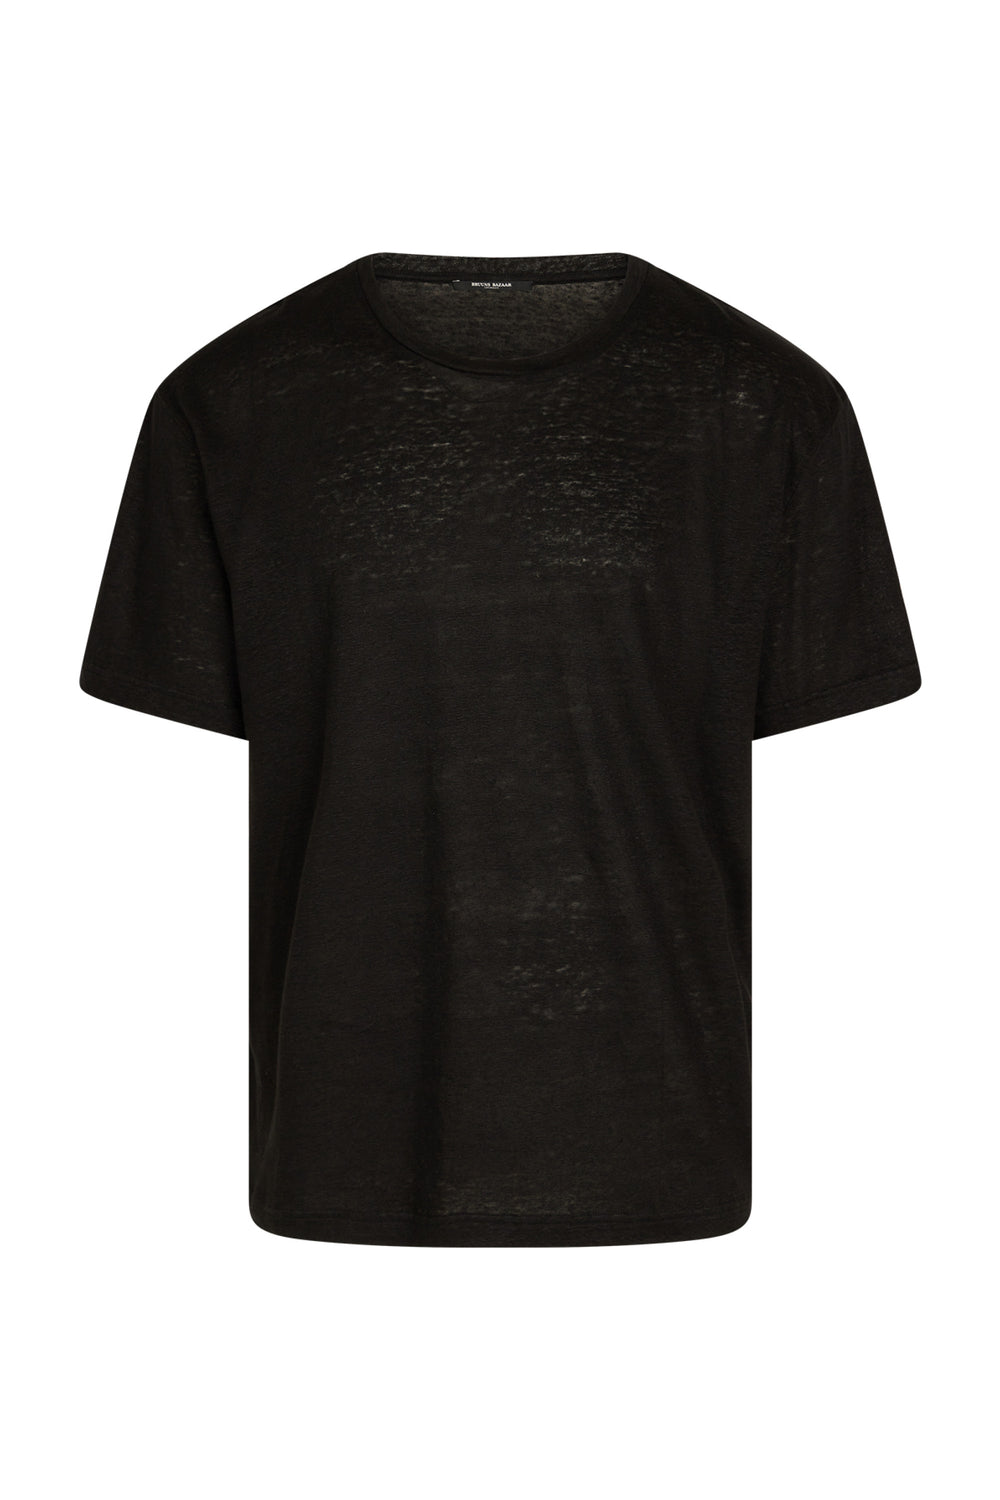 Bruuns Bazaar Men LinenBBRound tee T-shirts Black